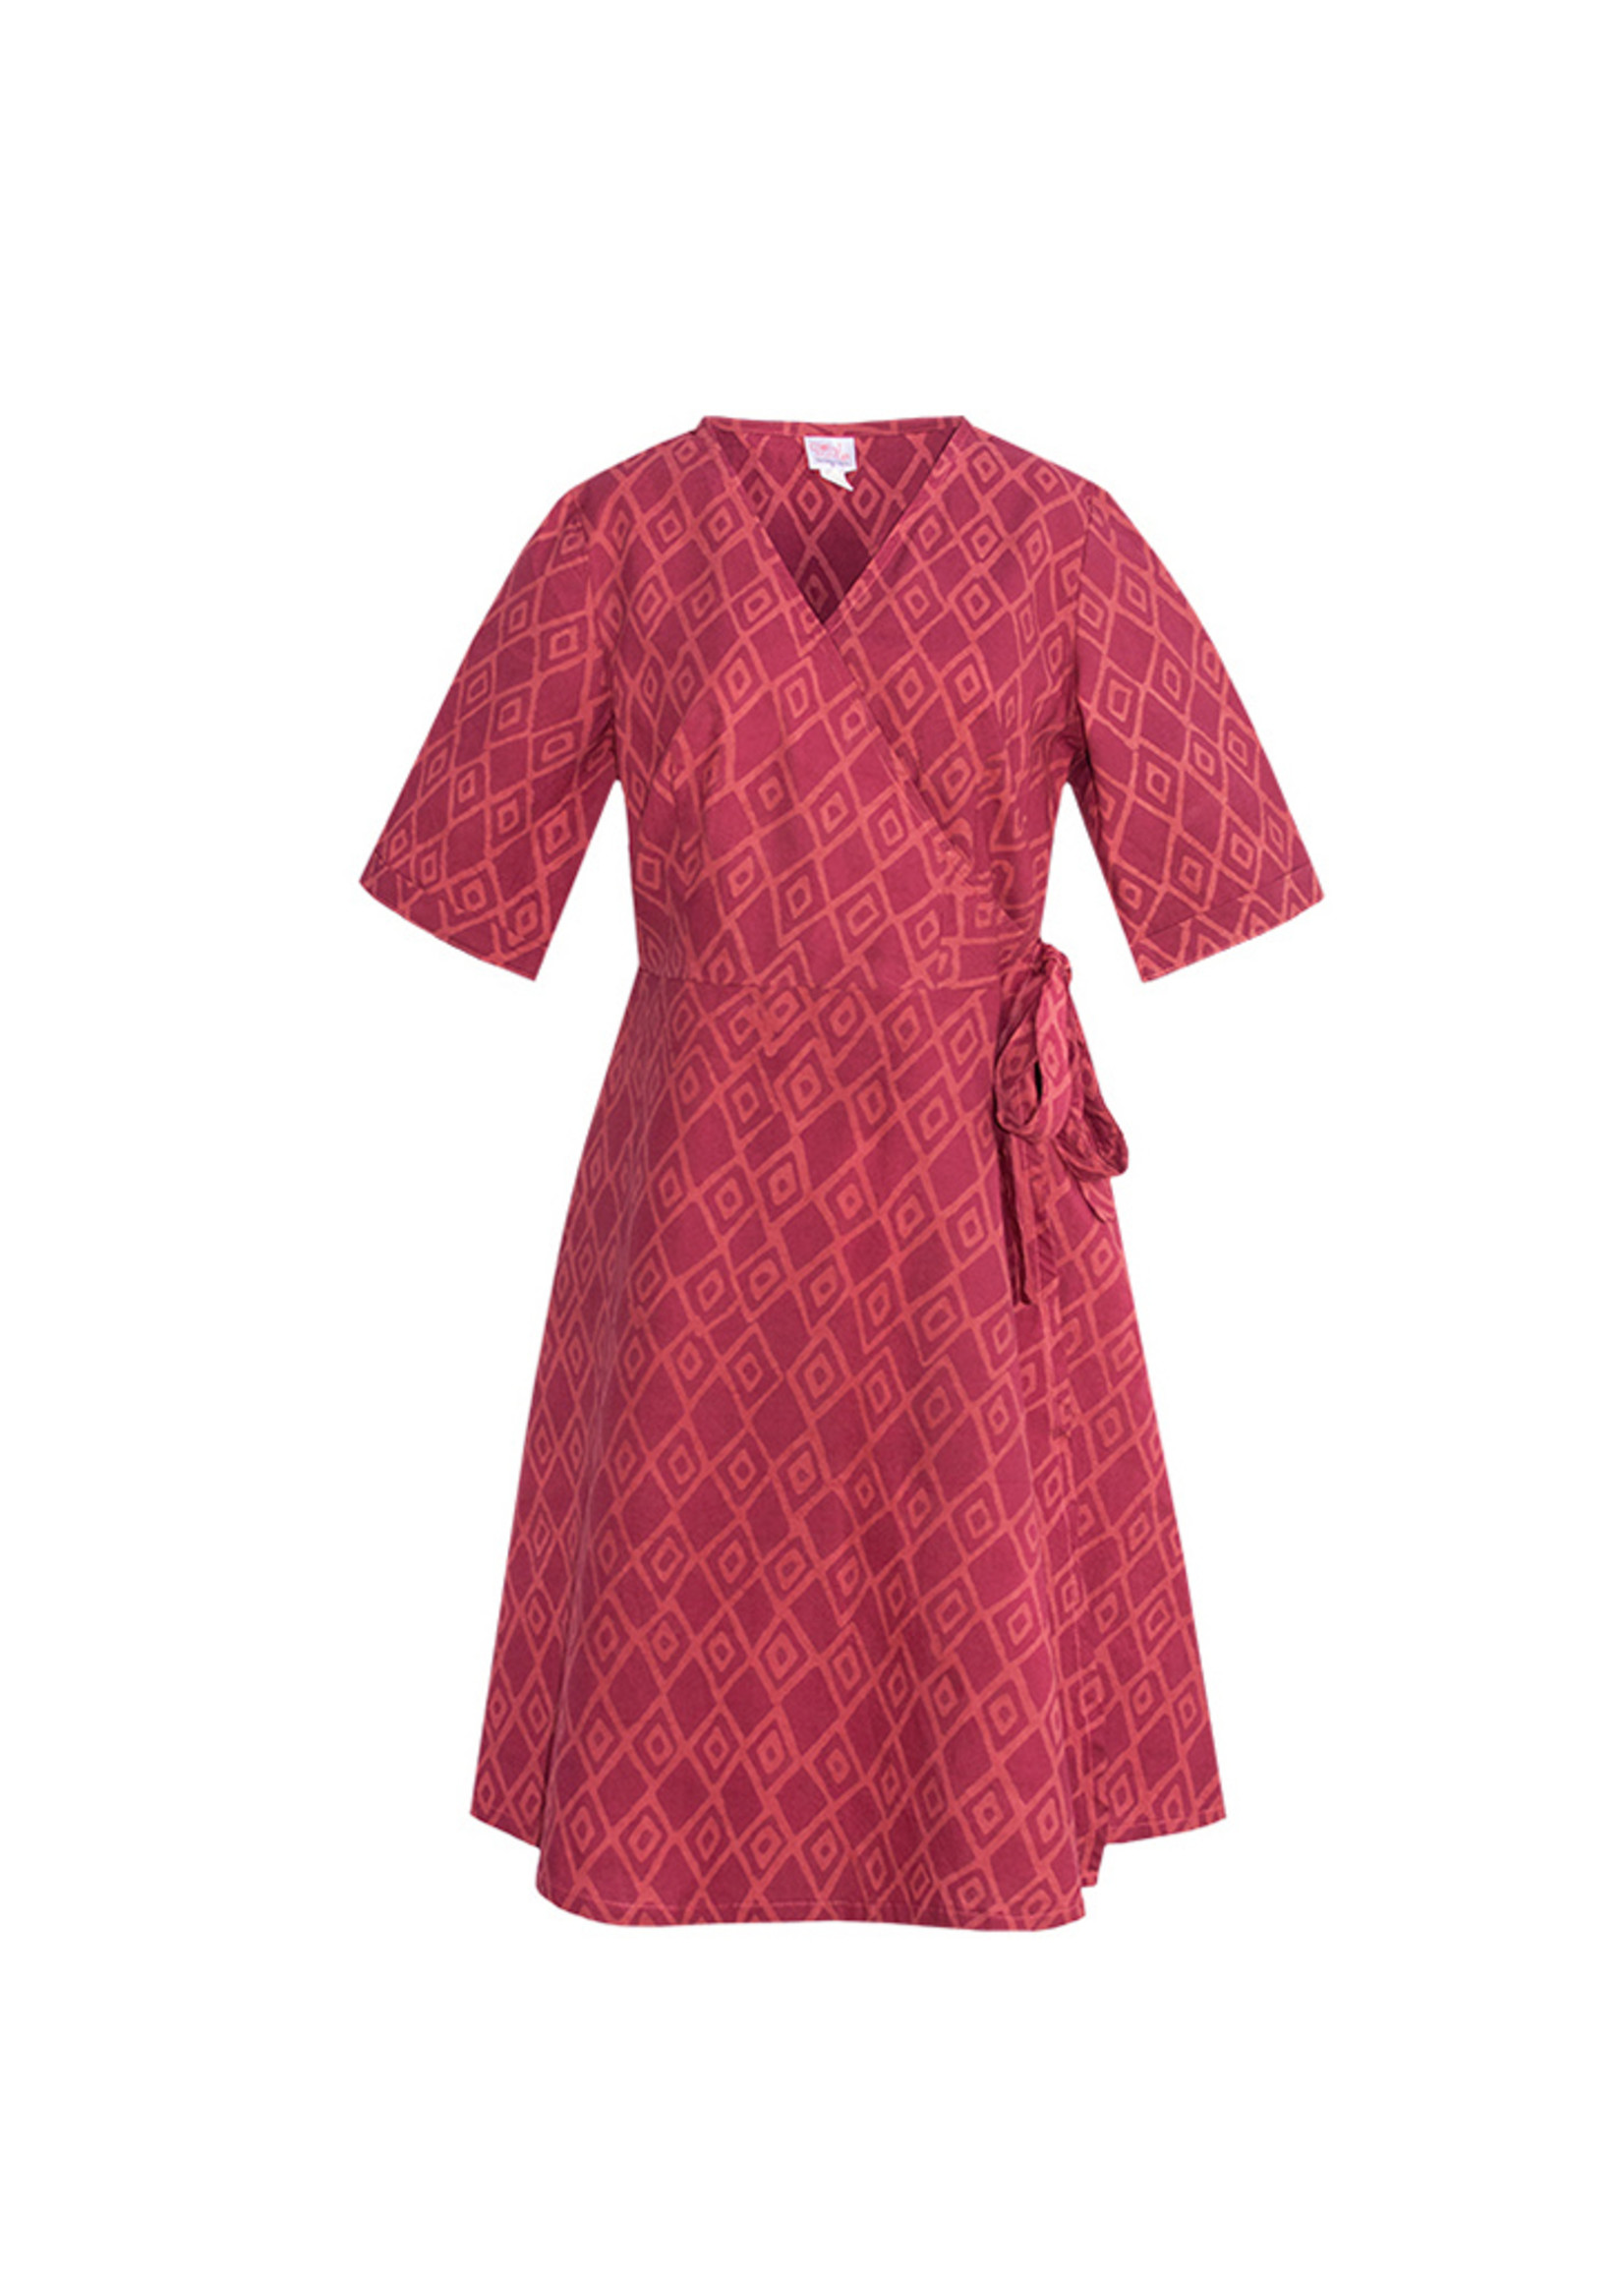 Global Mamas Argyle Wine Wrap Dress - 3/4 Sleeve